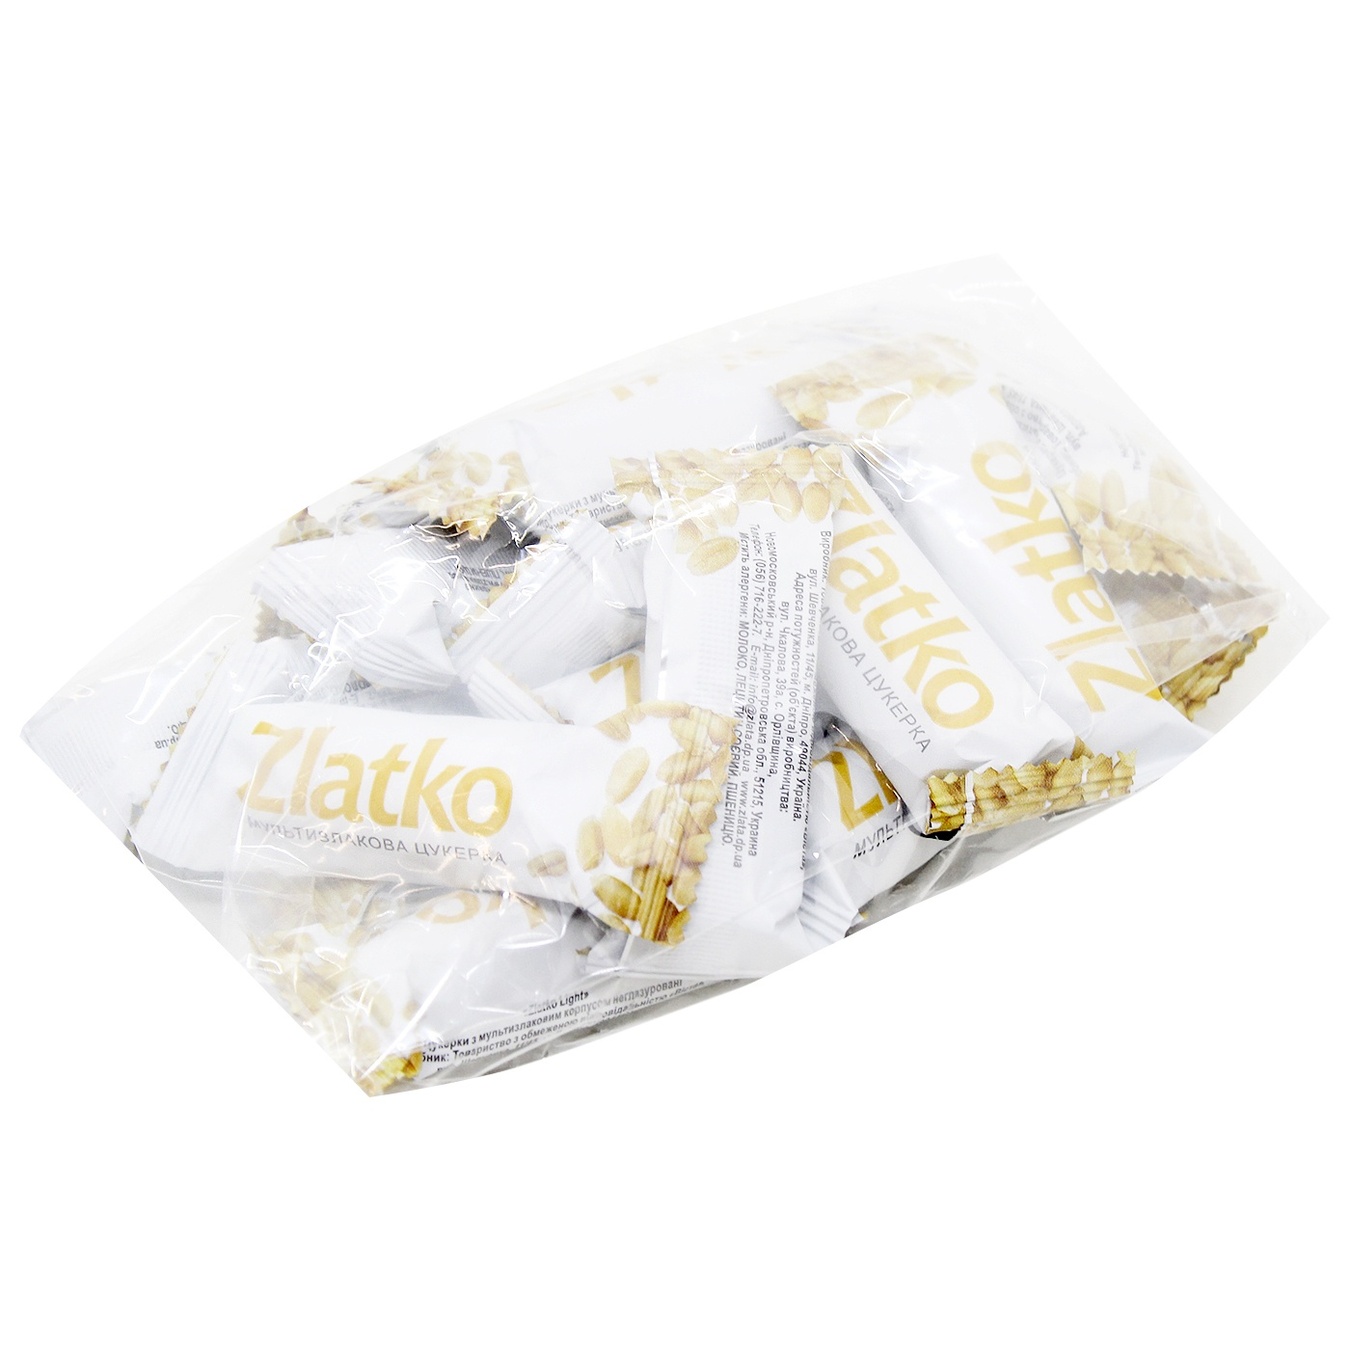 Zlatko Light candies with a multi-grain case, unglazed 150g